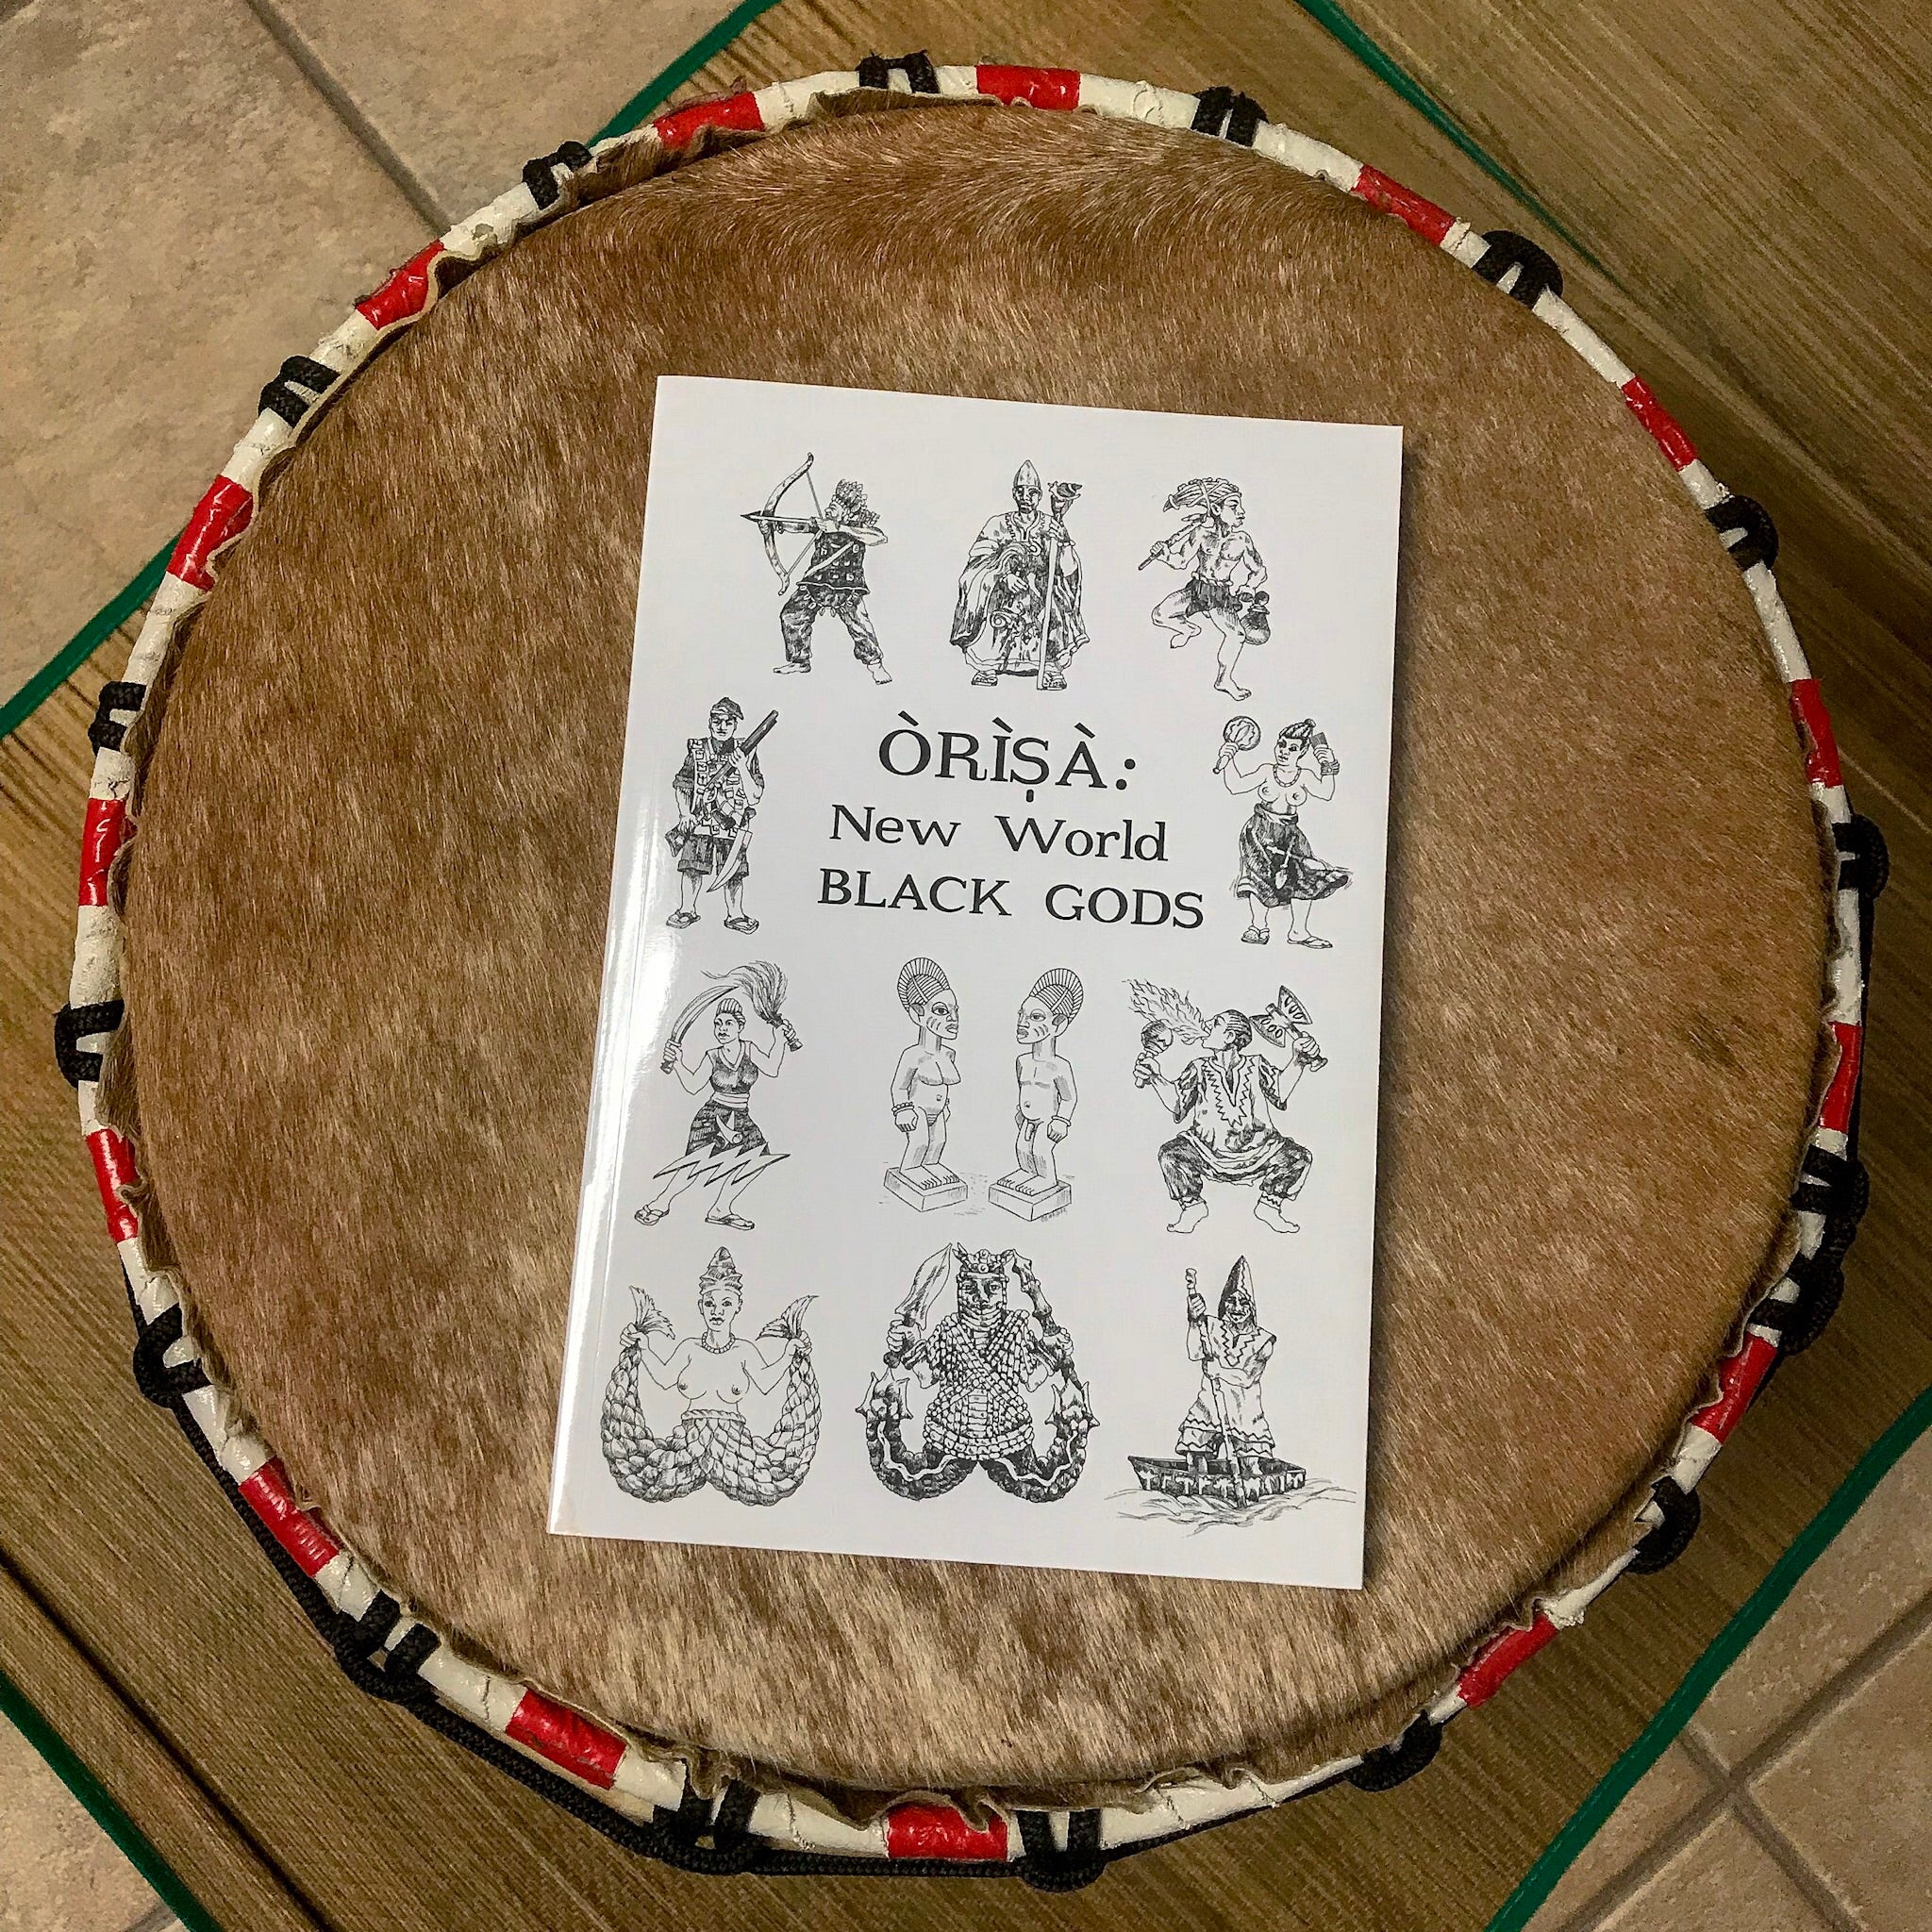 ORISA: New World Black Gods from Ritual+Vibe